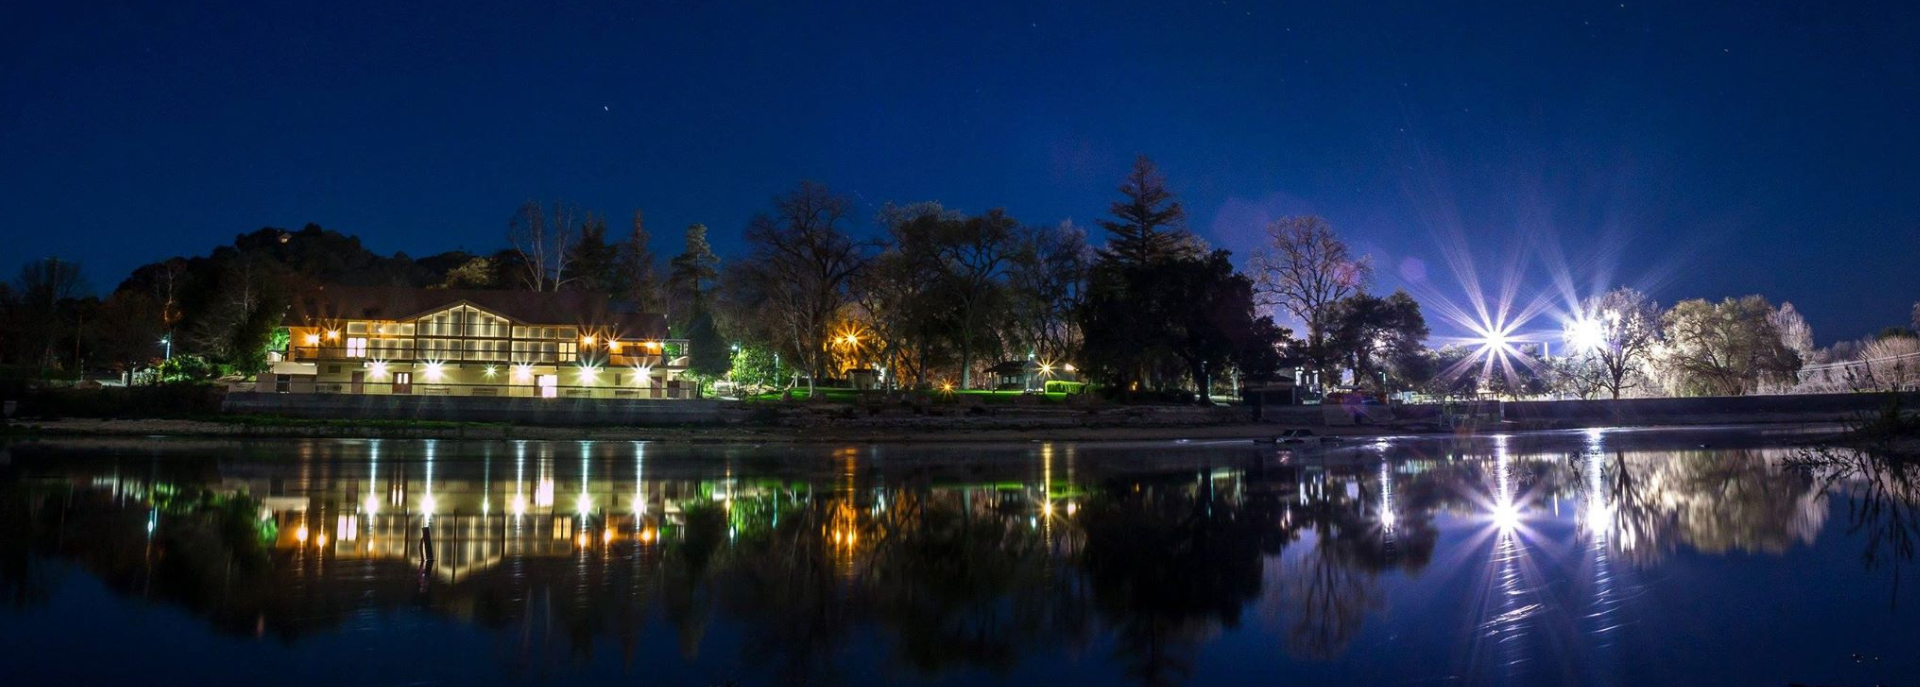 Night shot of the Pavilion on the Lake with vibrant light reflections on the Atascadero Lake.  Photo courtesy of Luke Phillips